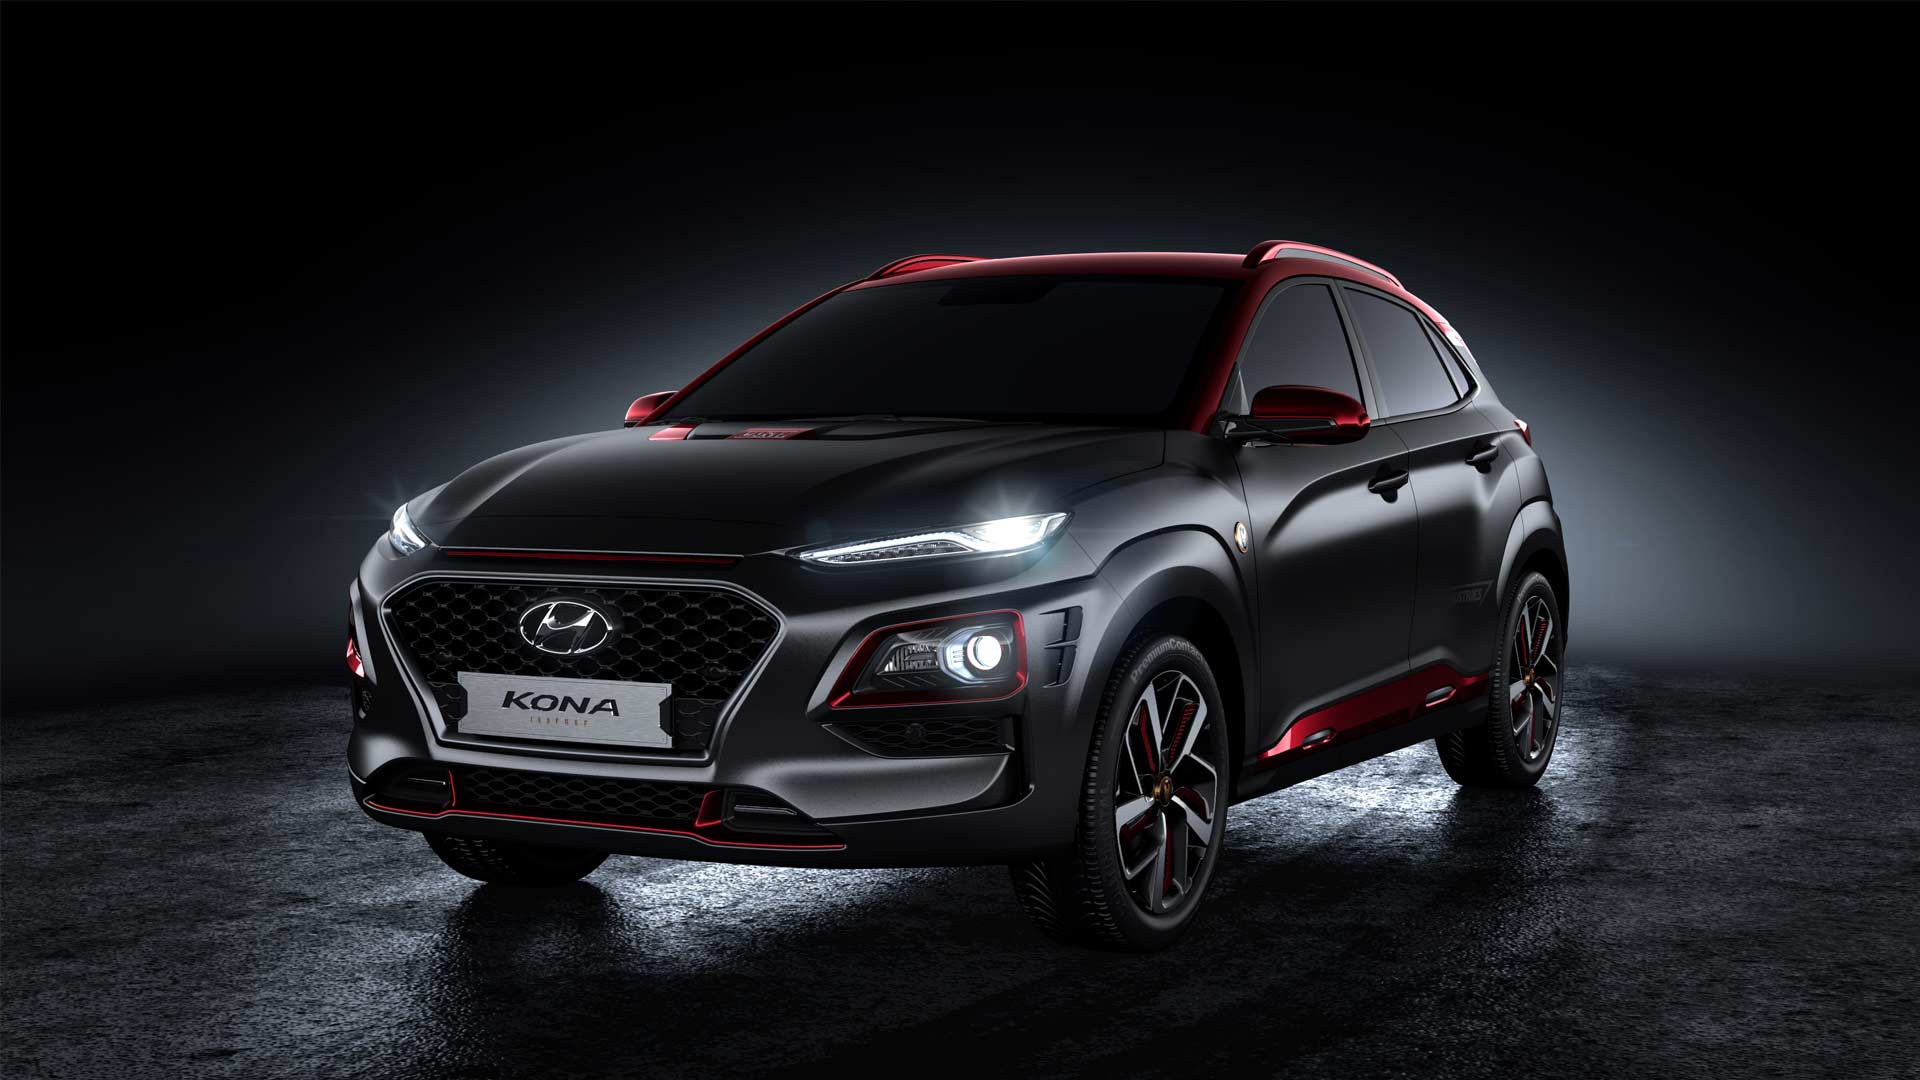 Hyundai Kona Iron Man Edition production begins in